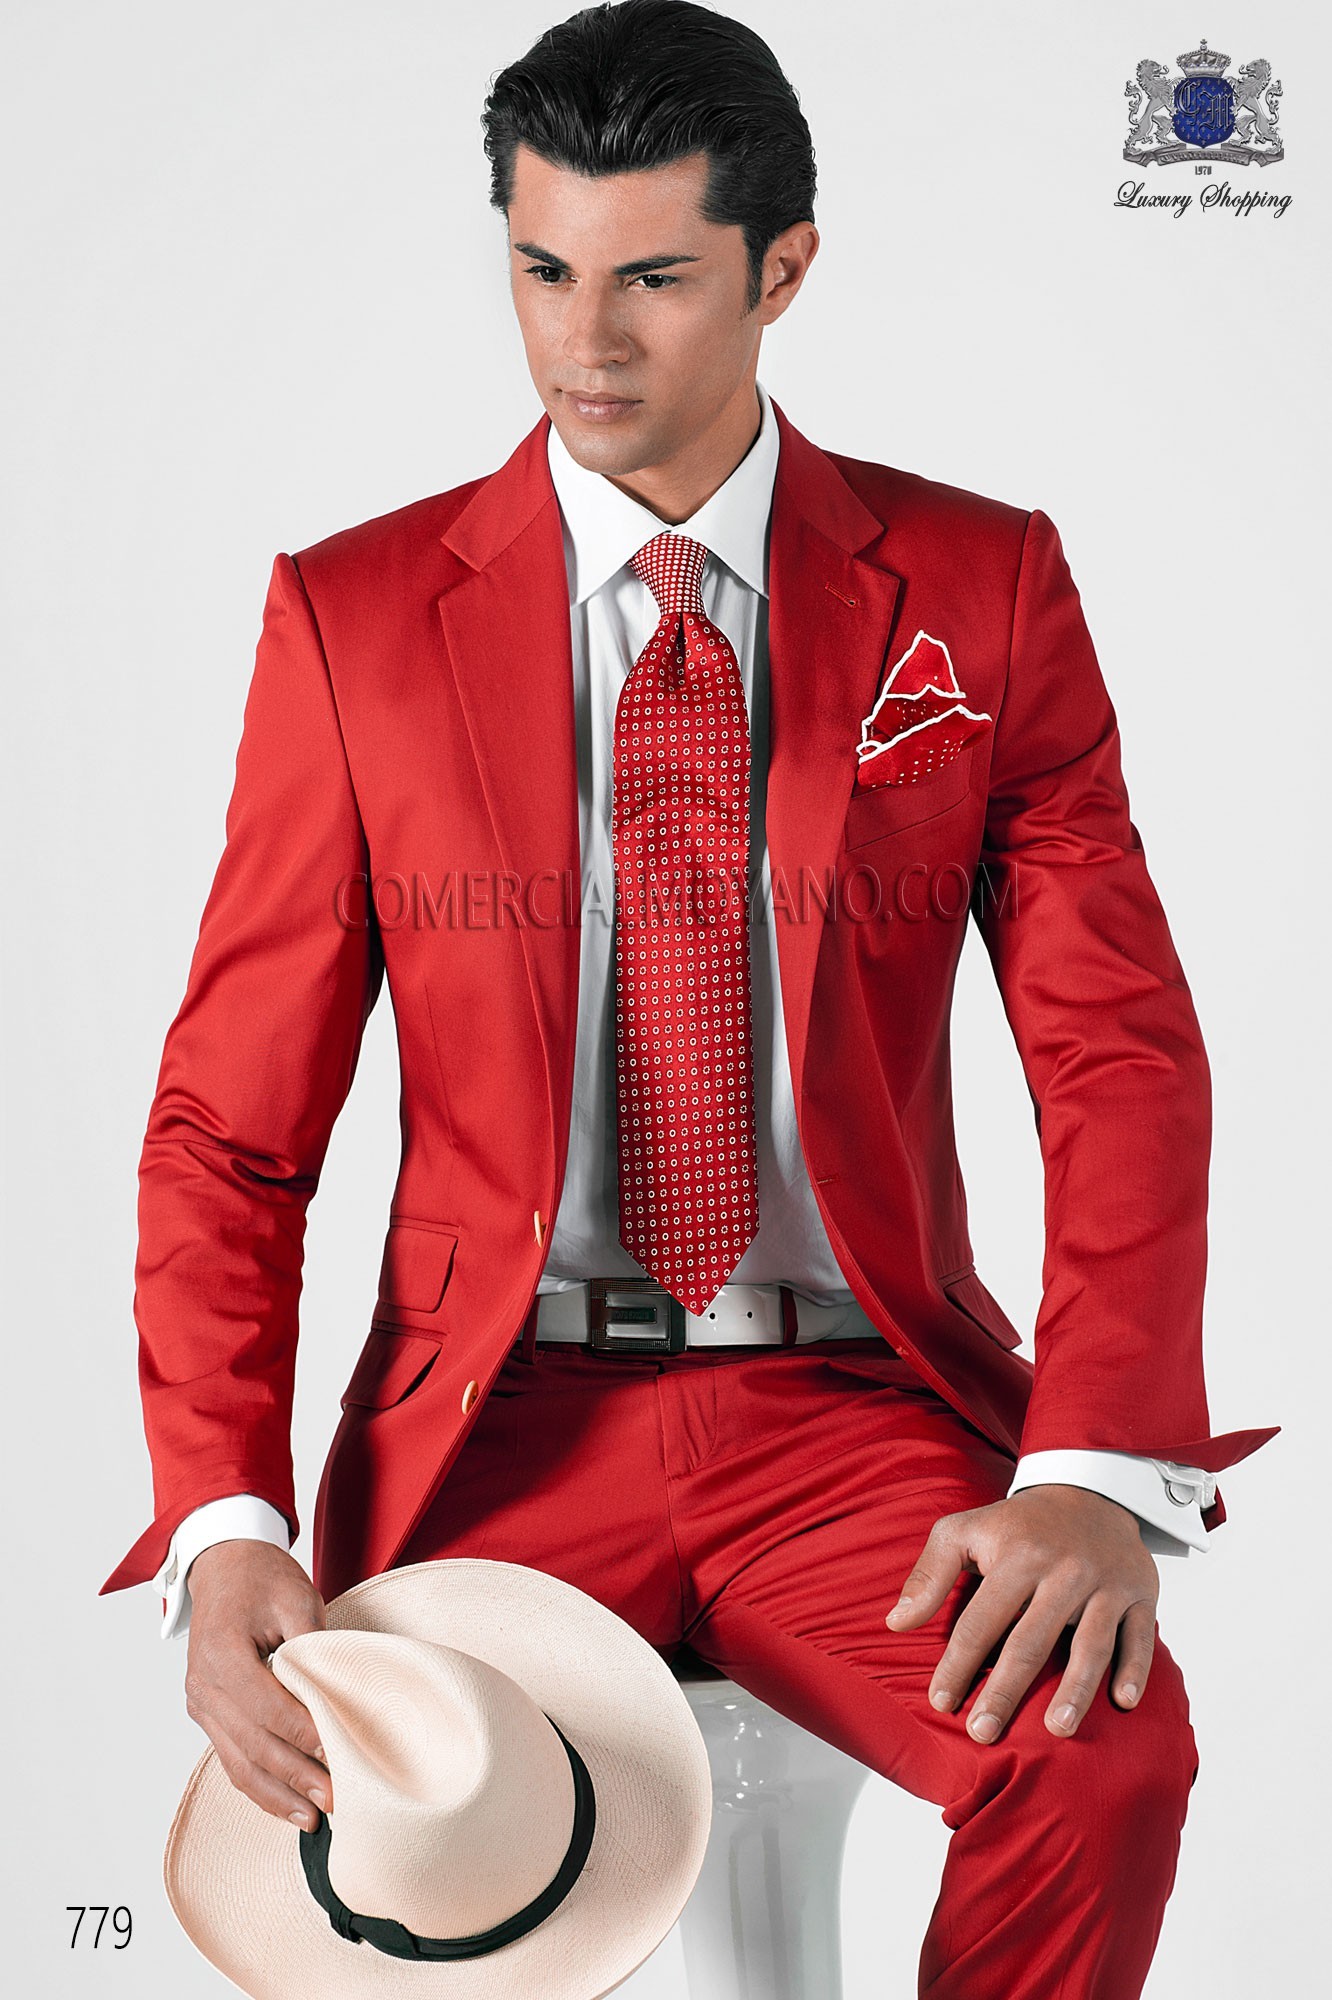 Hipster red men wedding suit model 779 Mario Moyano